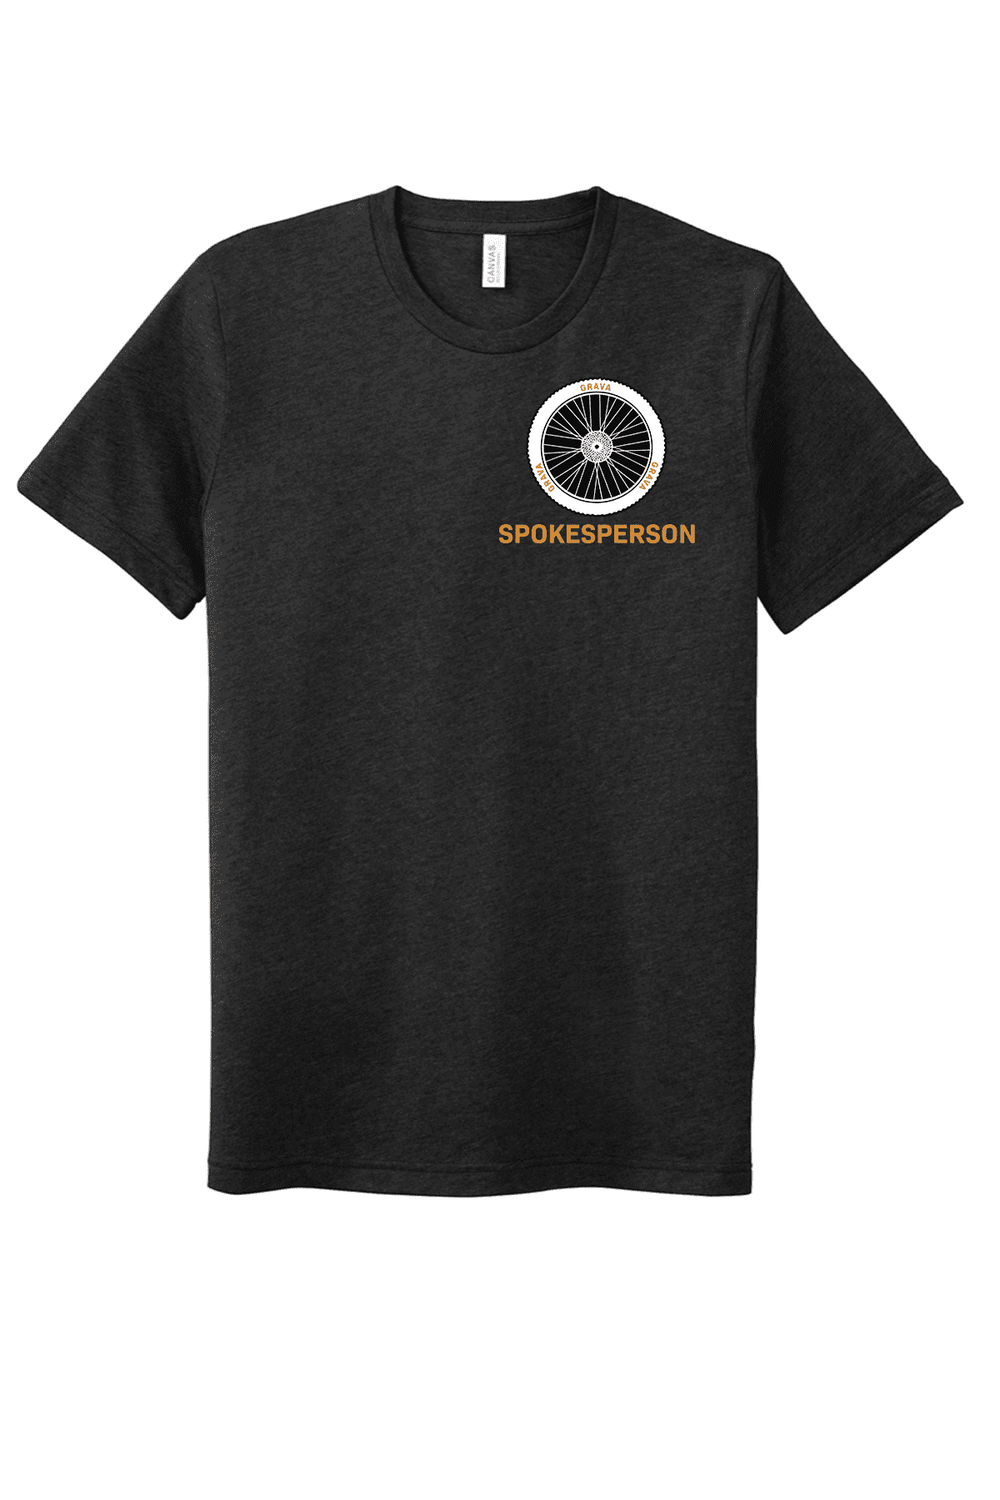 Spokesperson T-Shirt - Grava Adventure Corporation